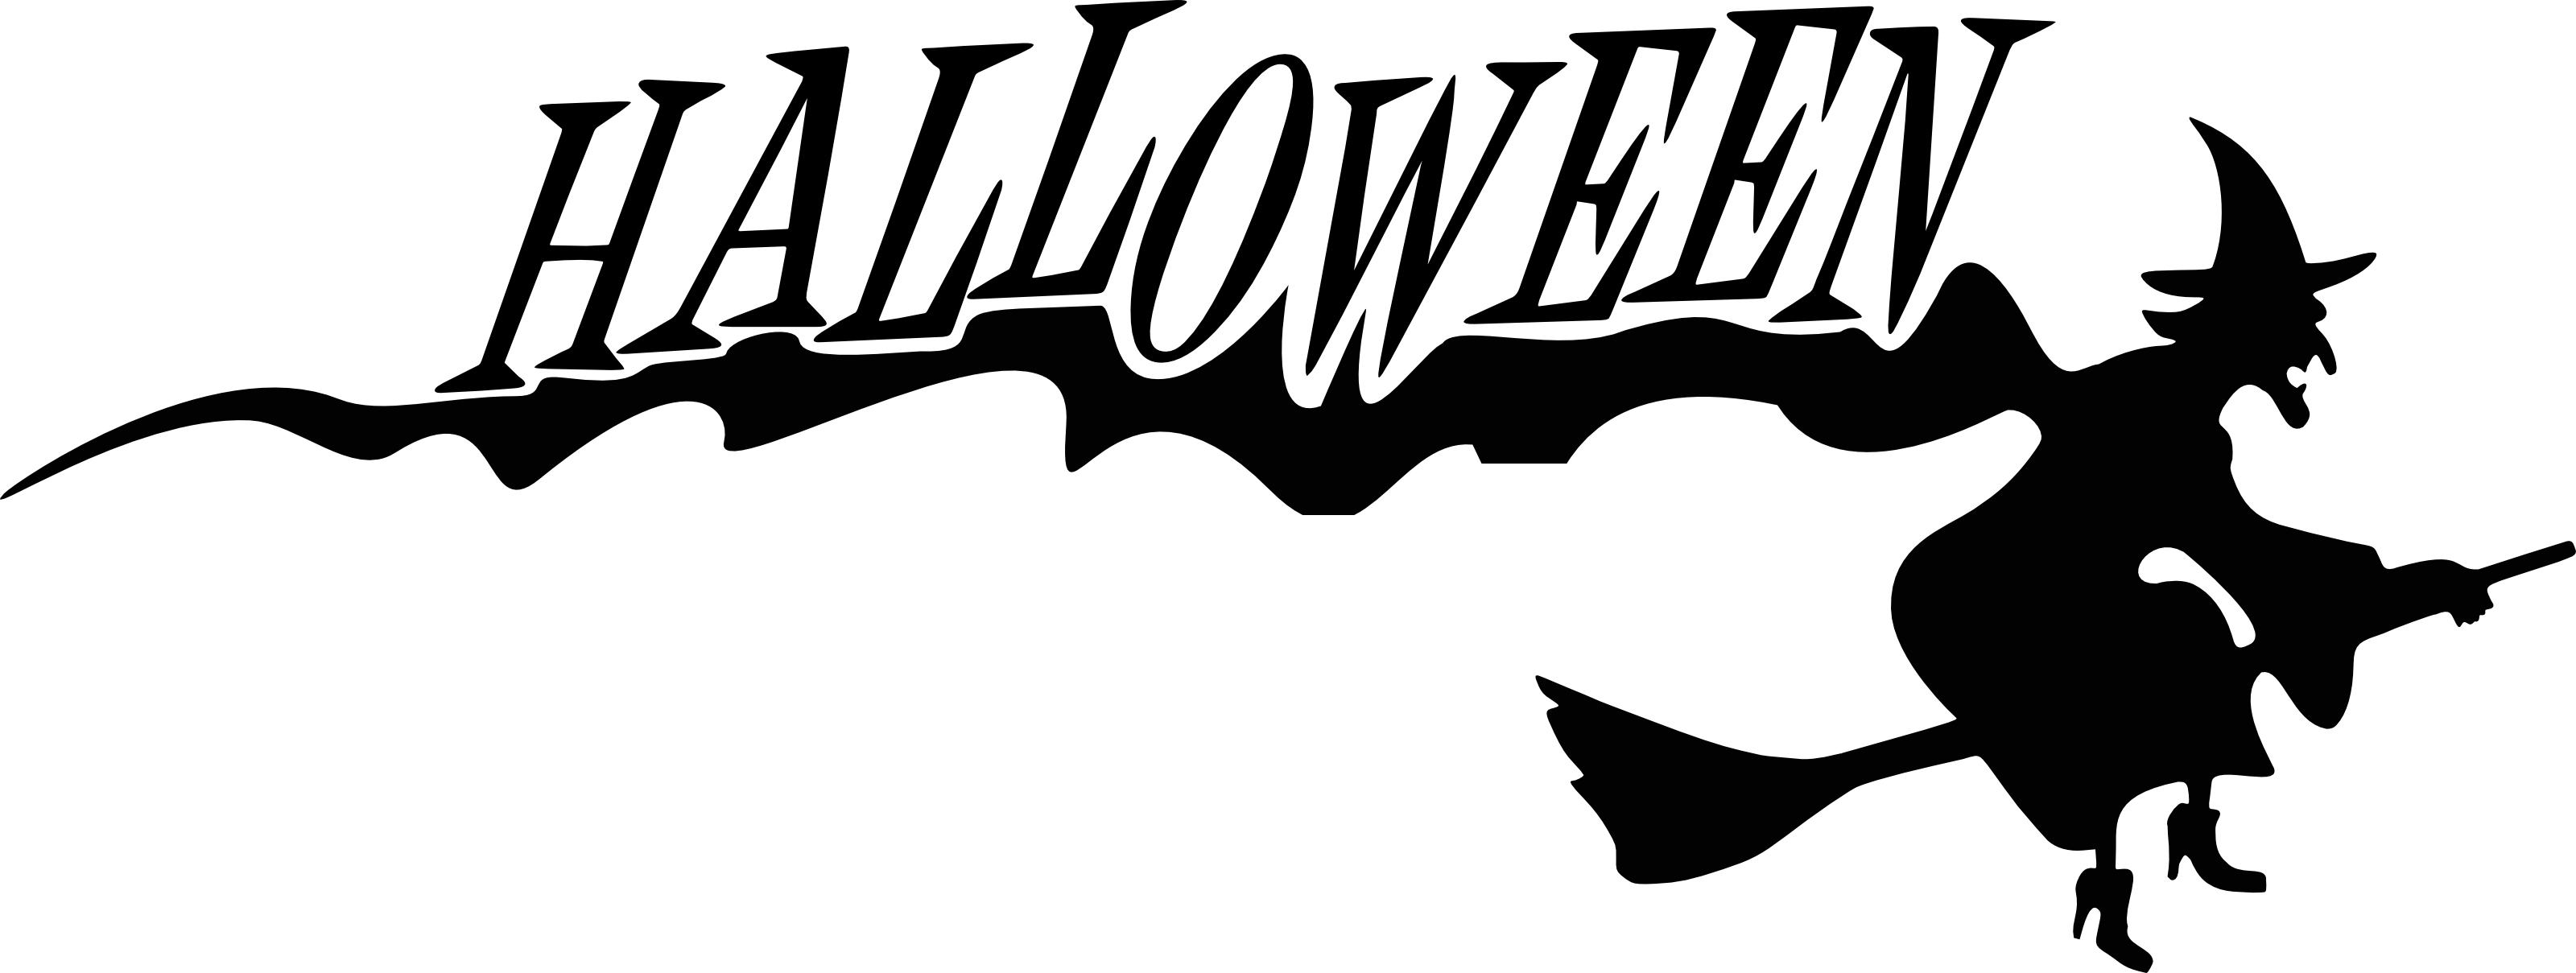 free vector clipart halloween - photo #5